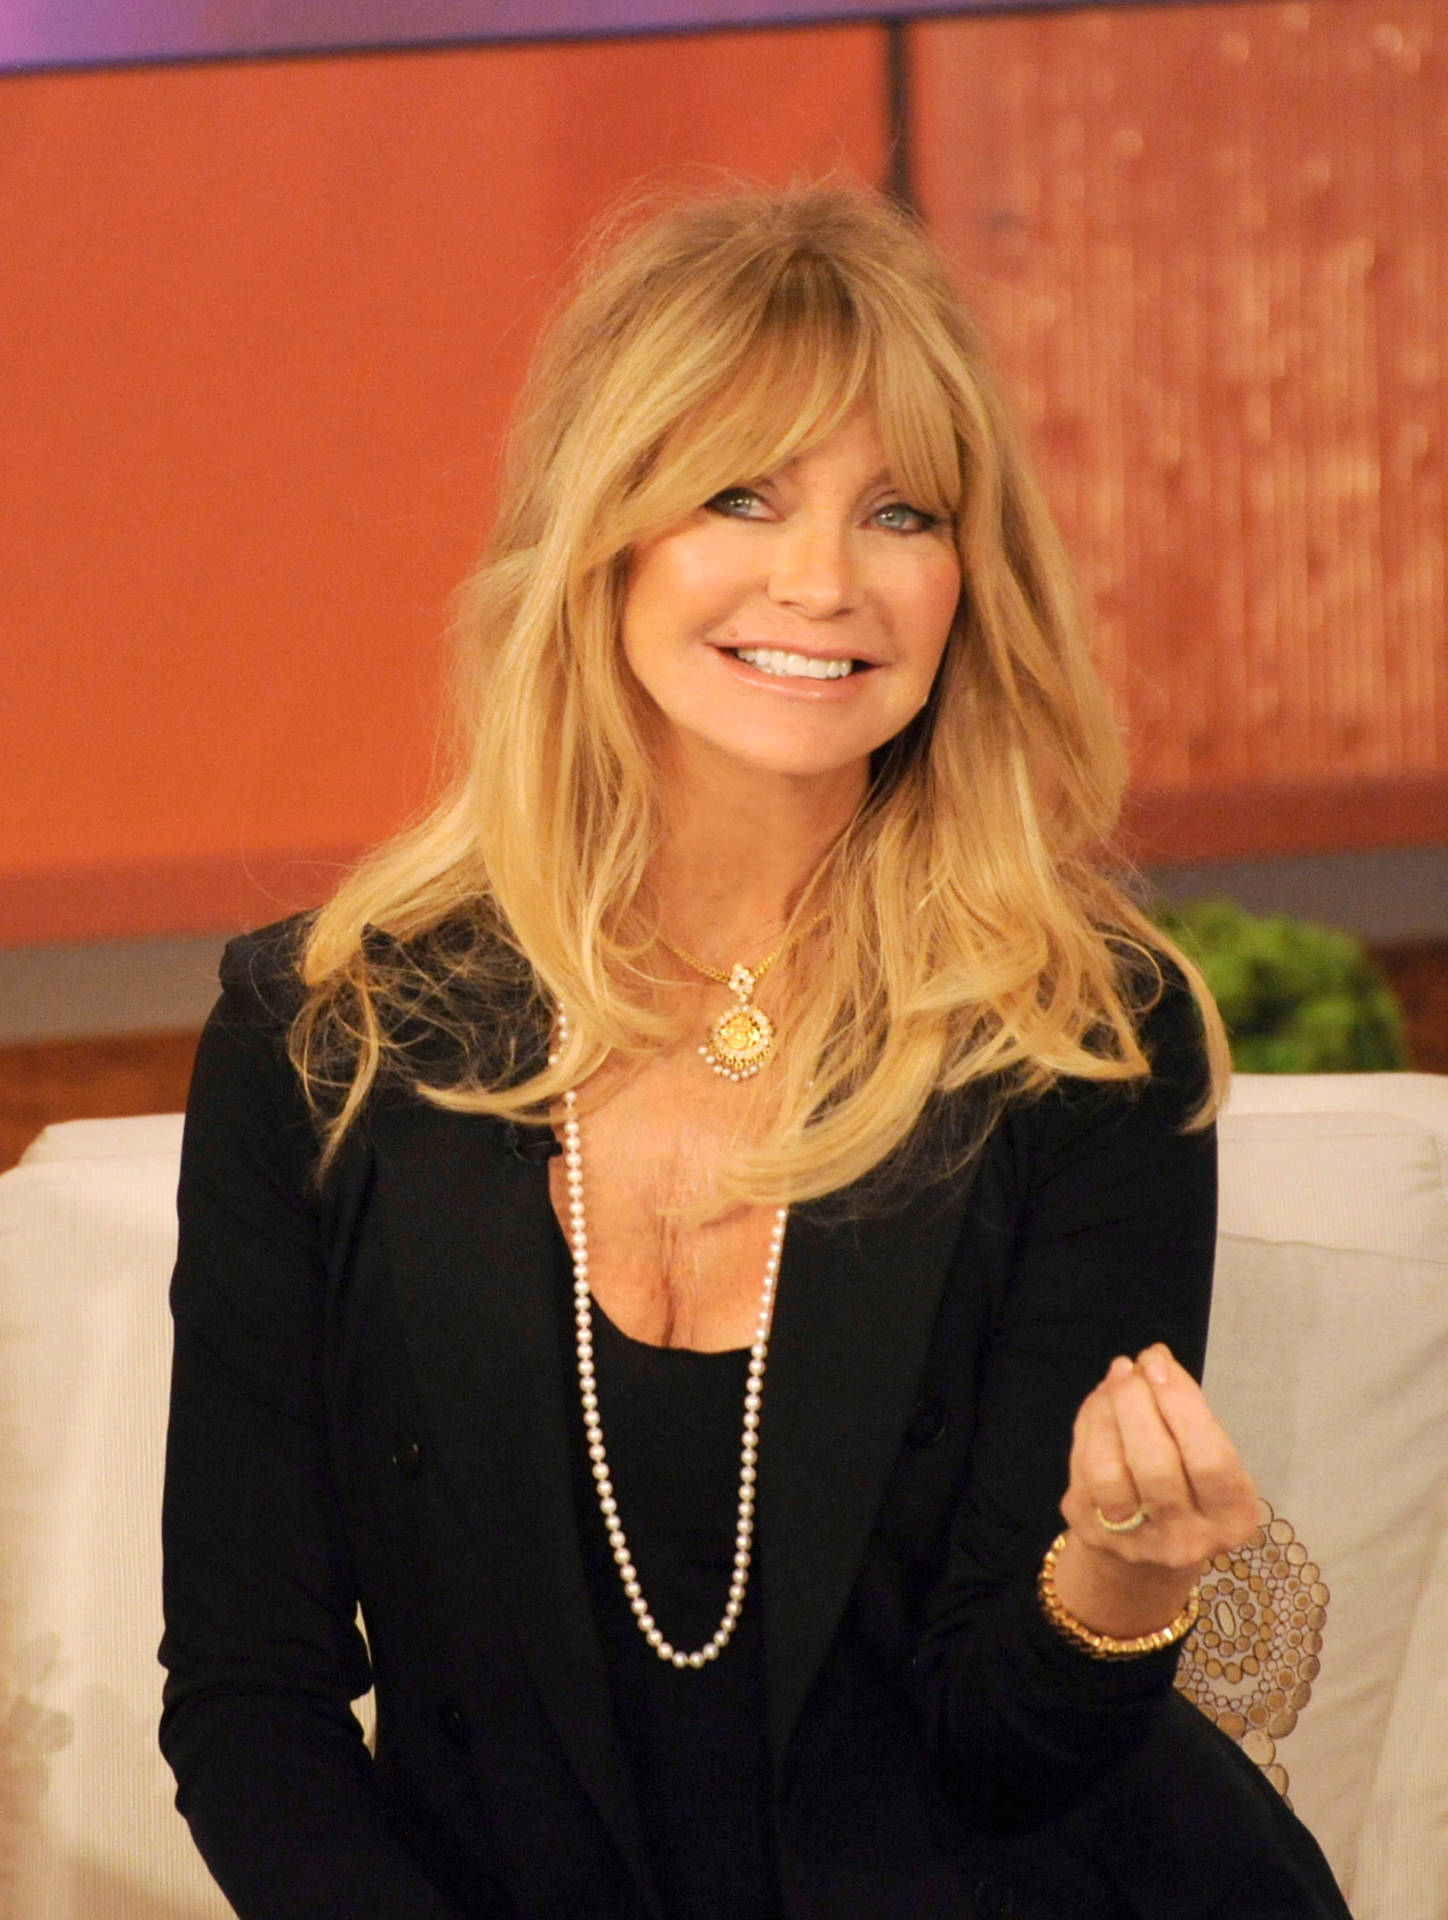 Goldie Hawn Wallpaper